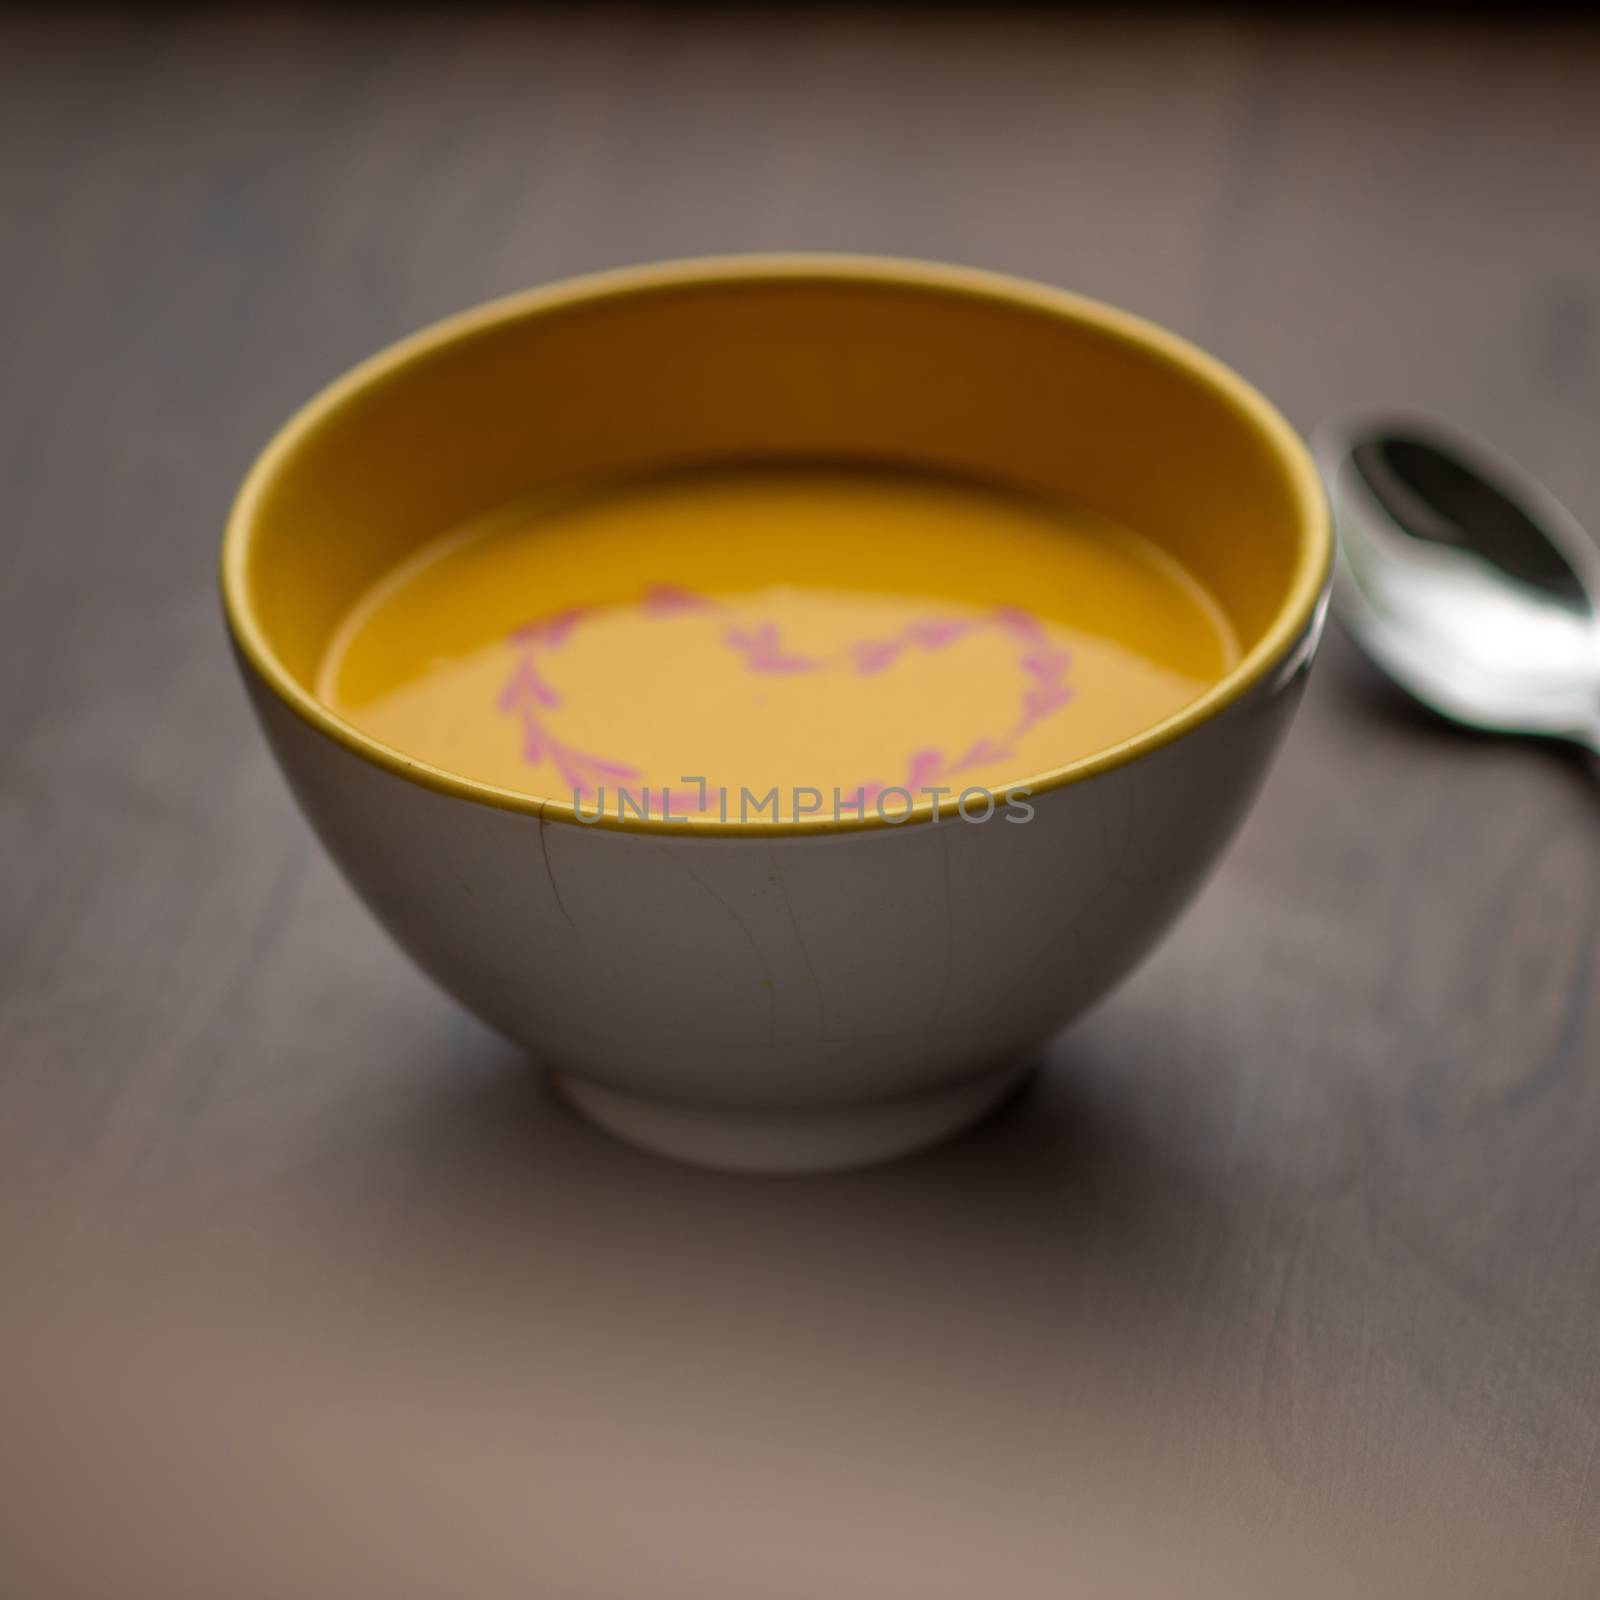 Vegetarian autumn - Pumpkin cream soup with hearth decoration by adamr